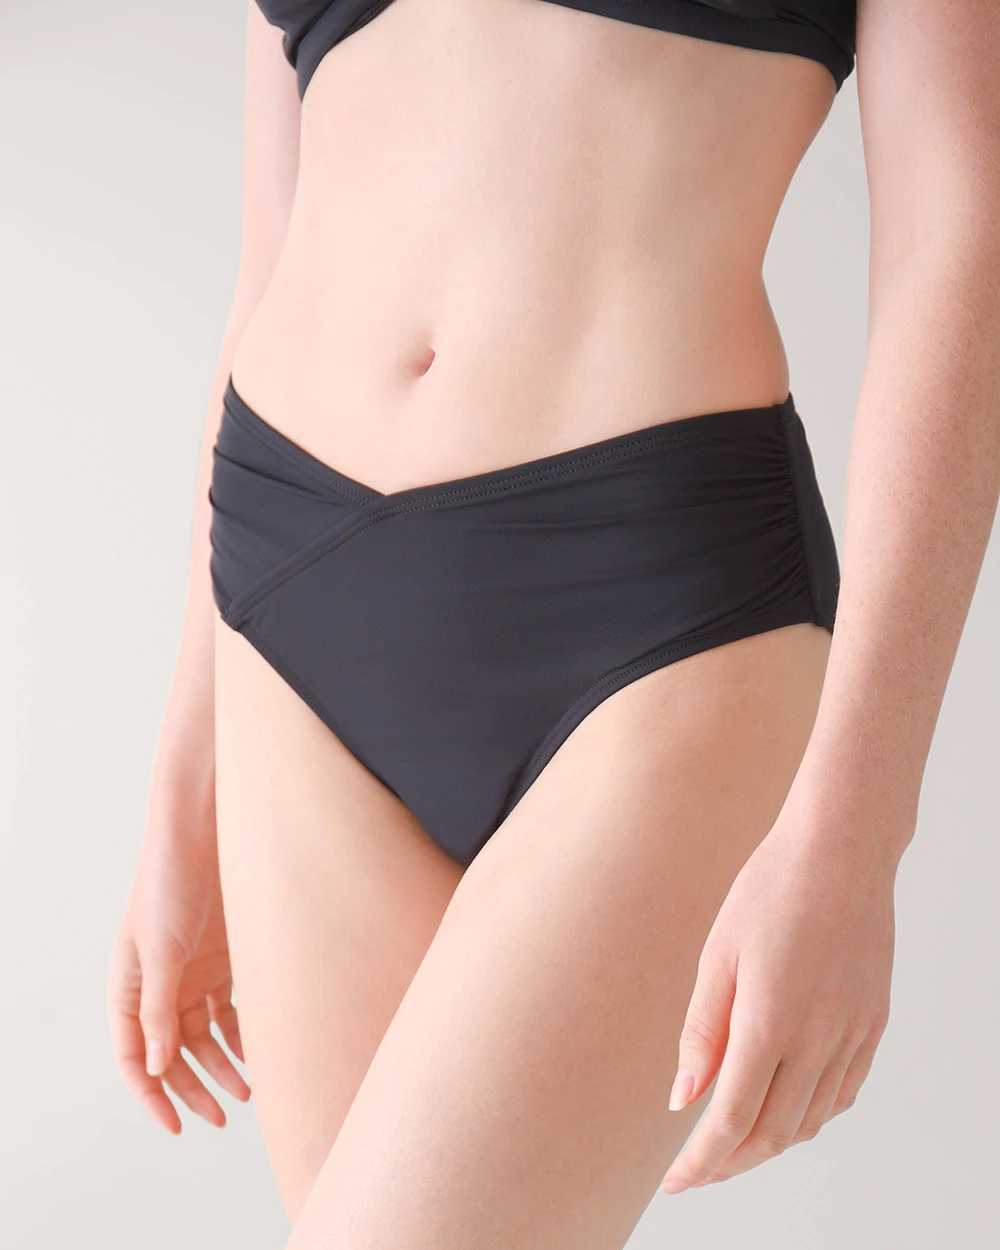 Two-Tone High-Waist Wrap Bikini Bottom click to view larger image.